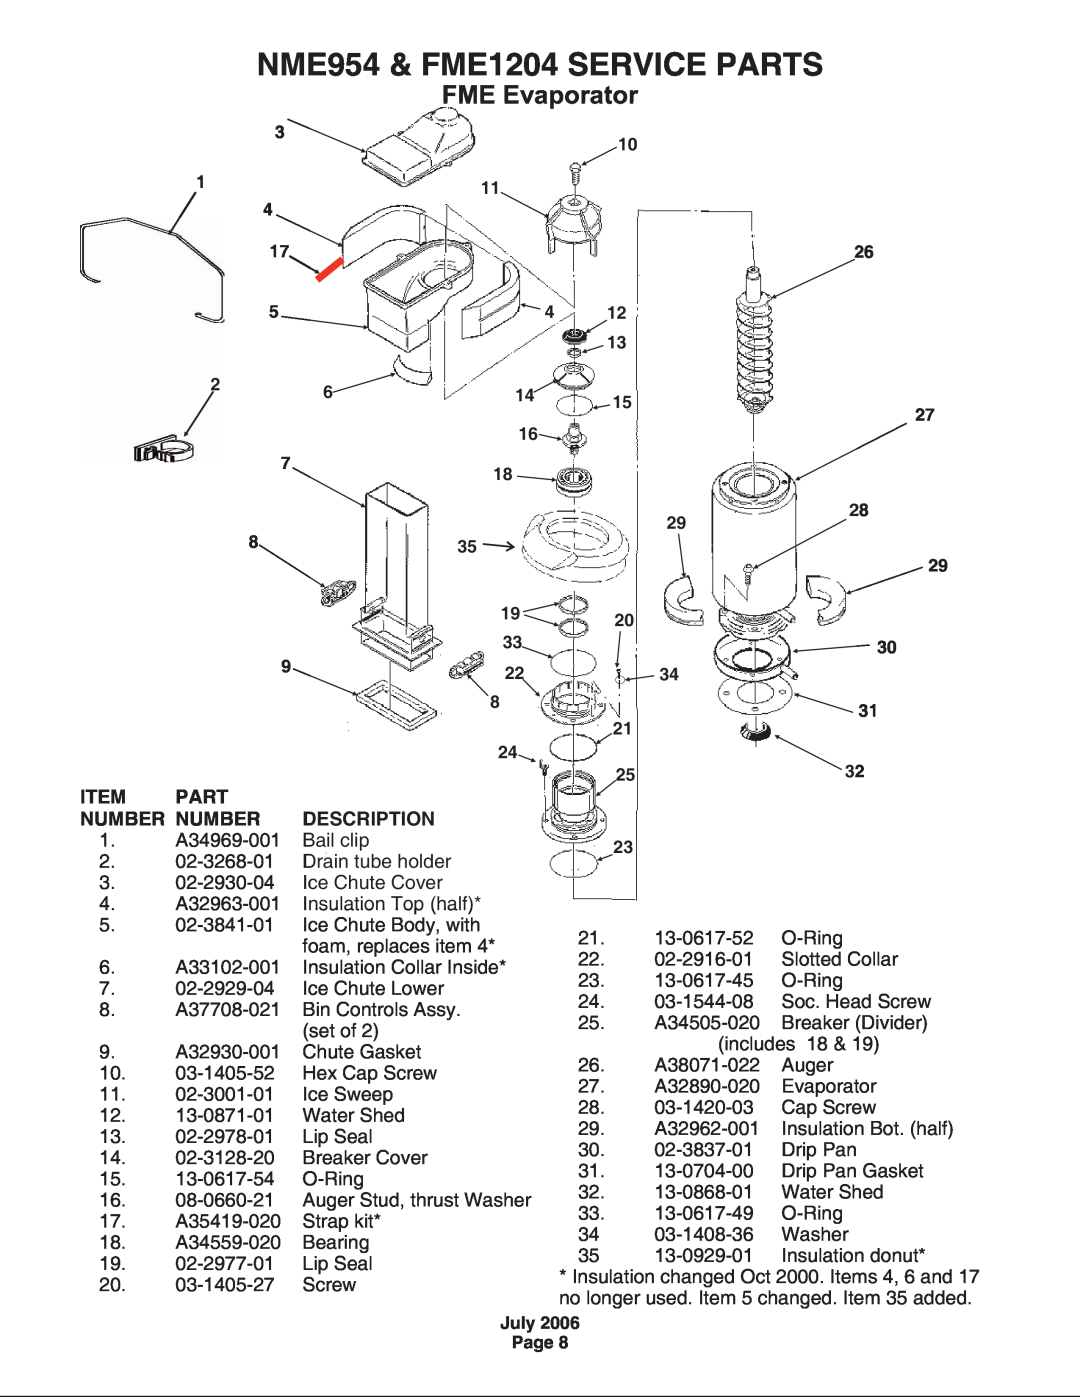 Scotsman Ice manual FME Evaporator, NME954 & FME1204 SERVICE PARTS, Item Part Number Number Description 